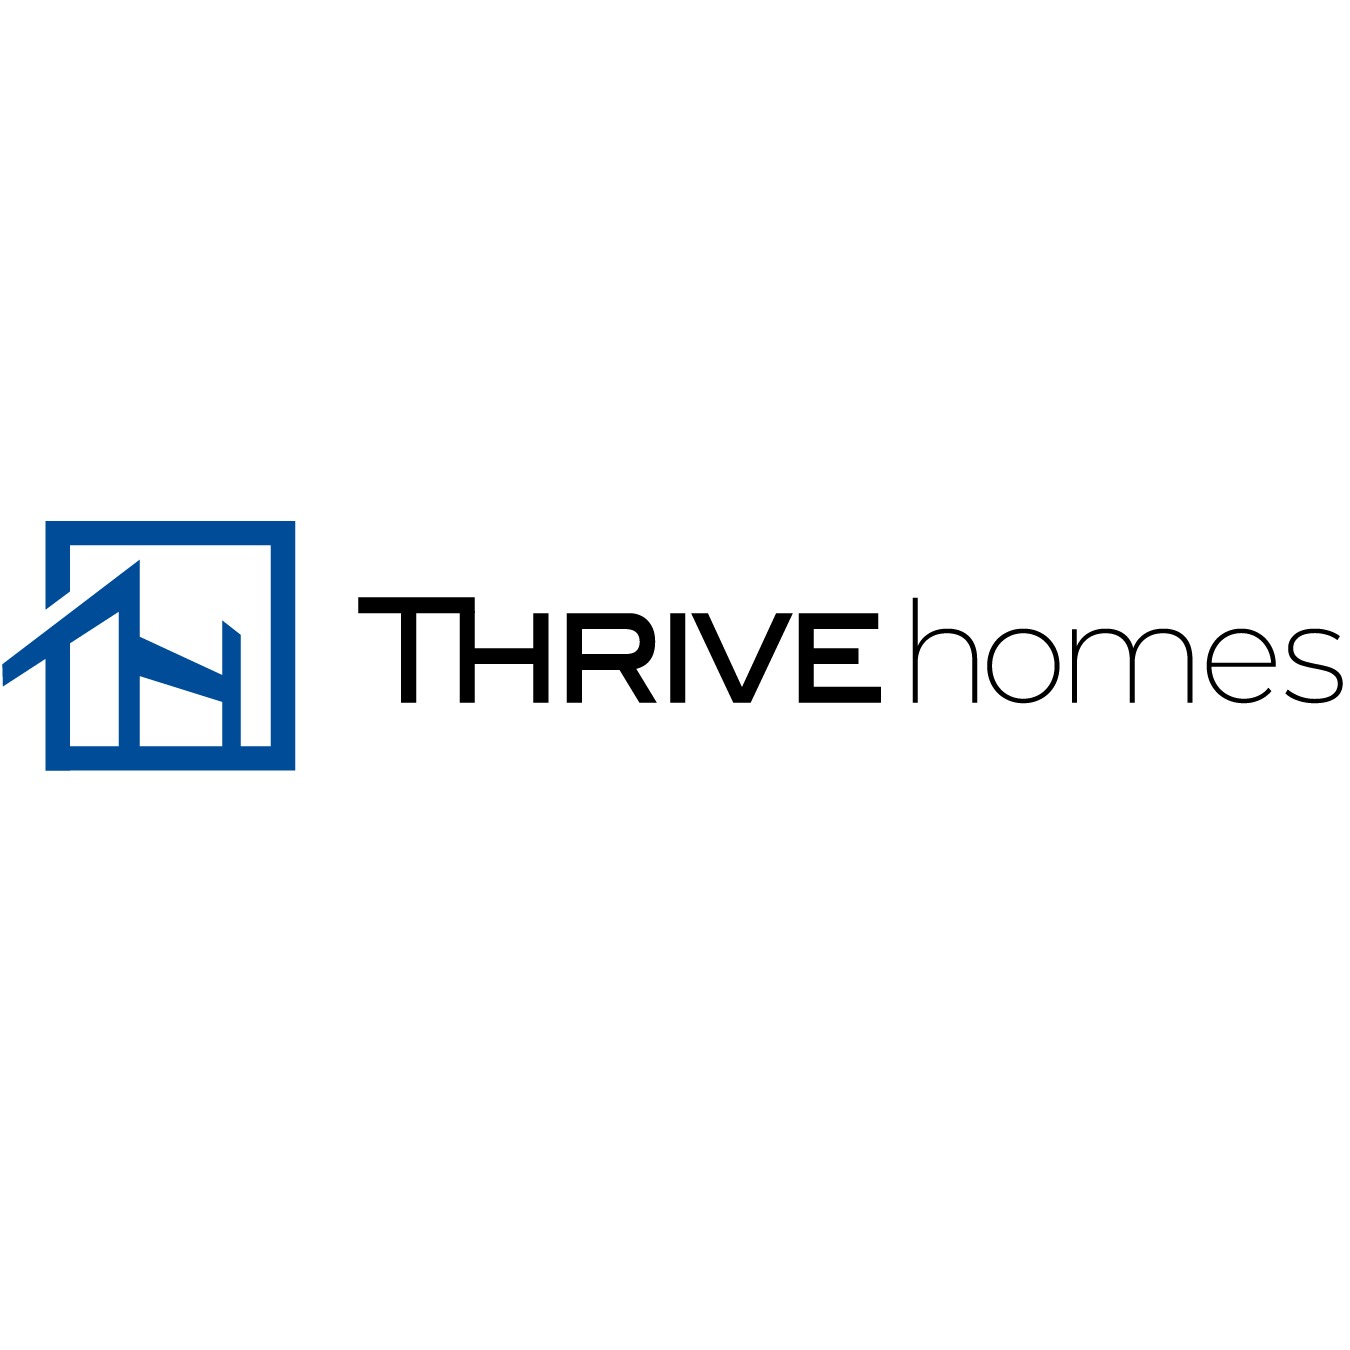 Thrive Homes